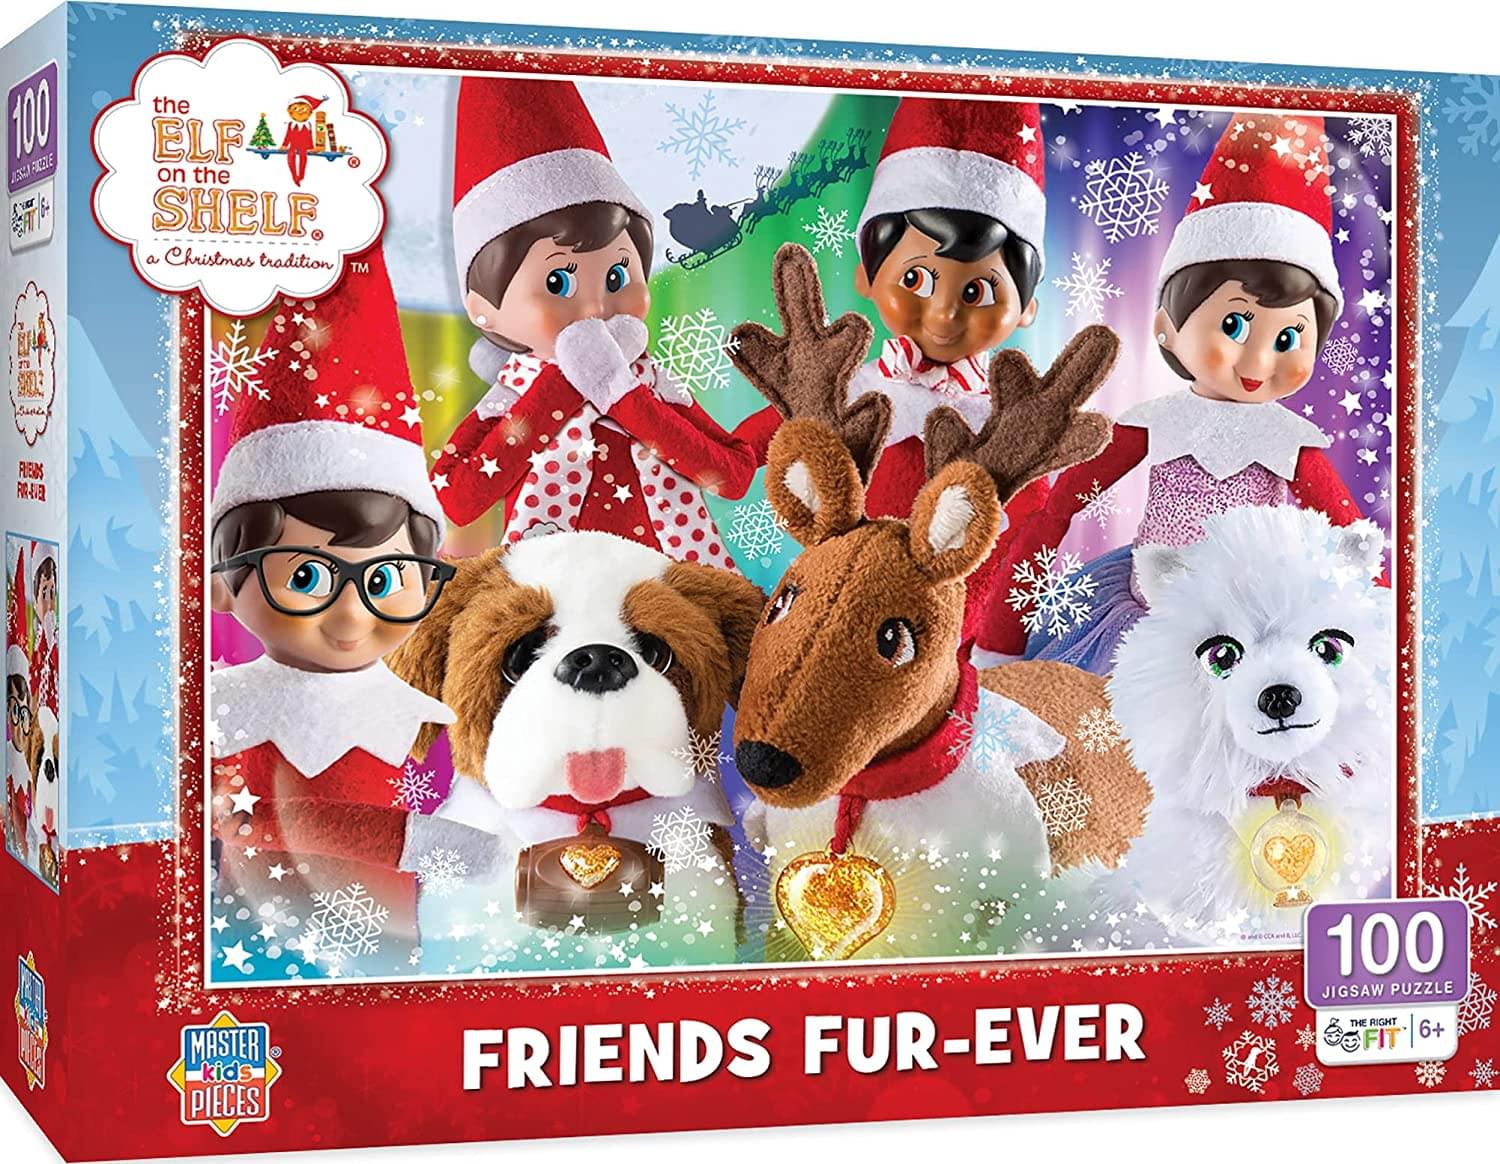 Elf on a Shelf Friends Fur-ever 100 Piece Kids Jigsaw Puzzle